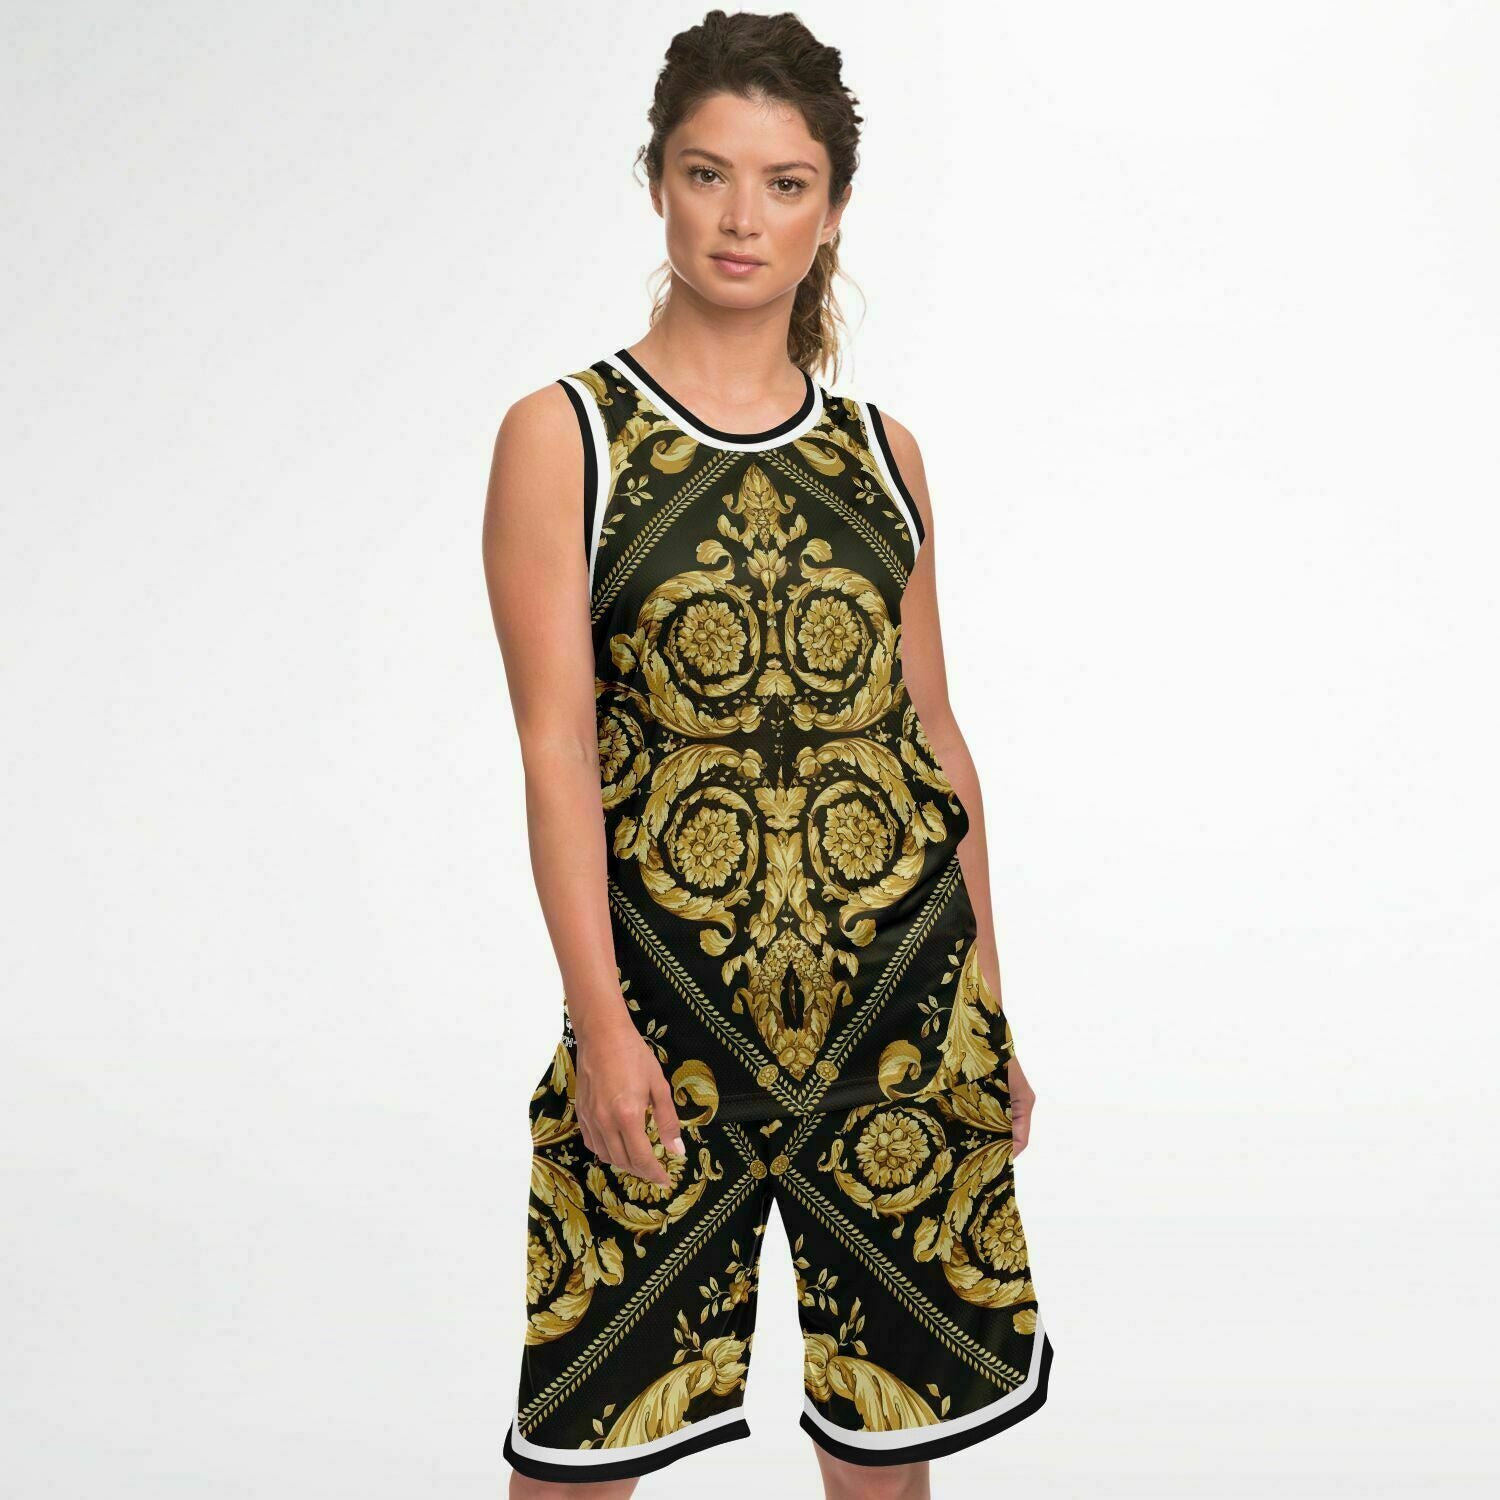 Baroque Print Basketball Set Jersey and Shorts - HipHatter